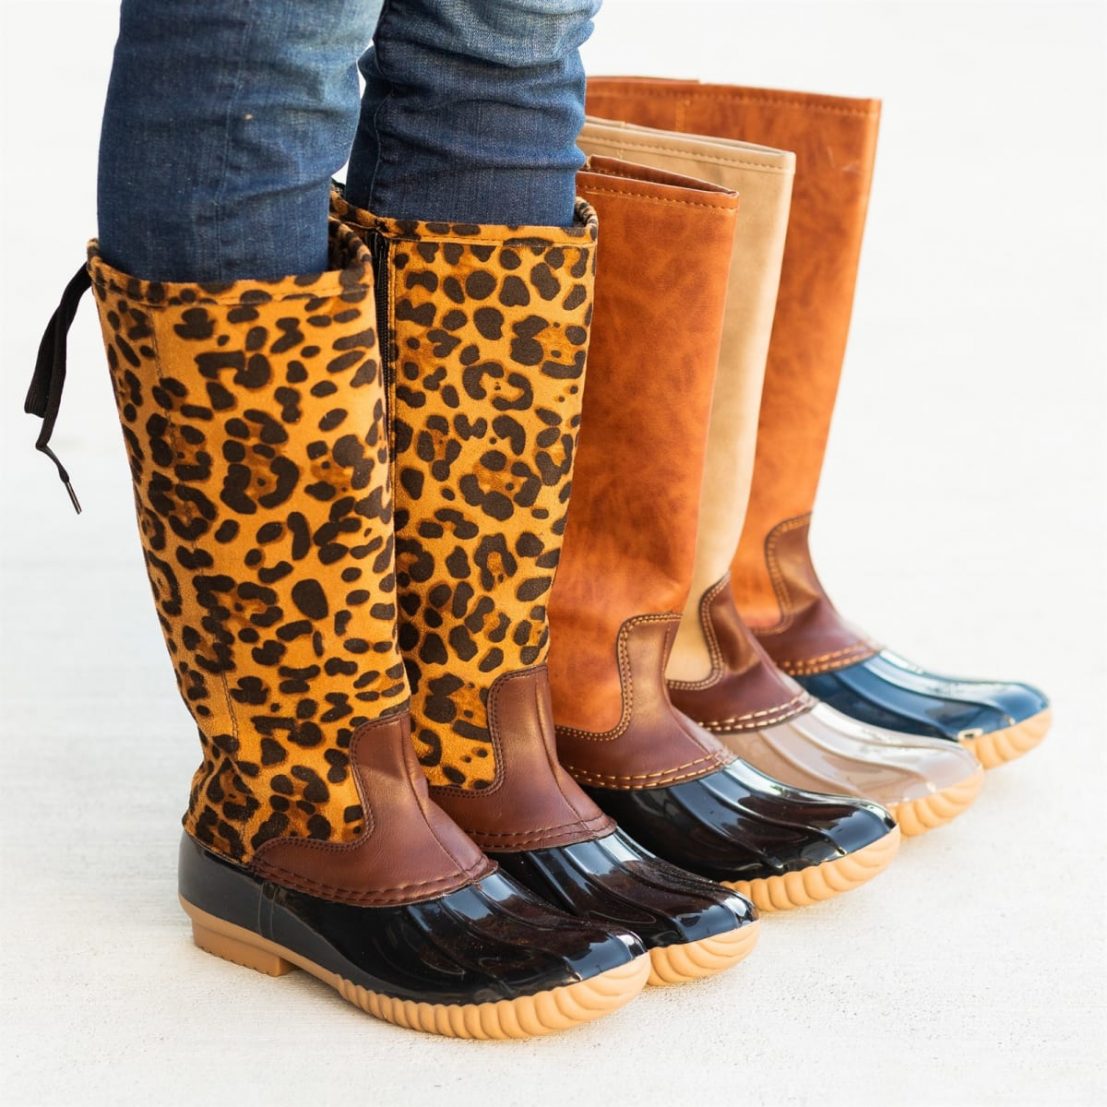 Chic Tall Duck Boots for $24.99 Shipped (Reg $79.99)! – Utah Sweet Savings